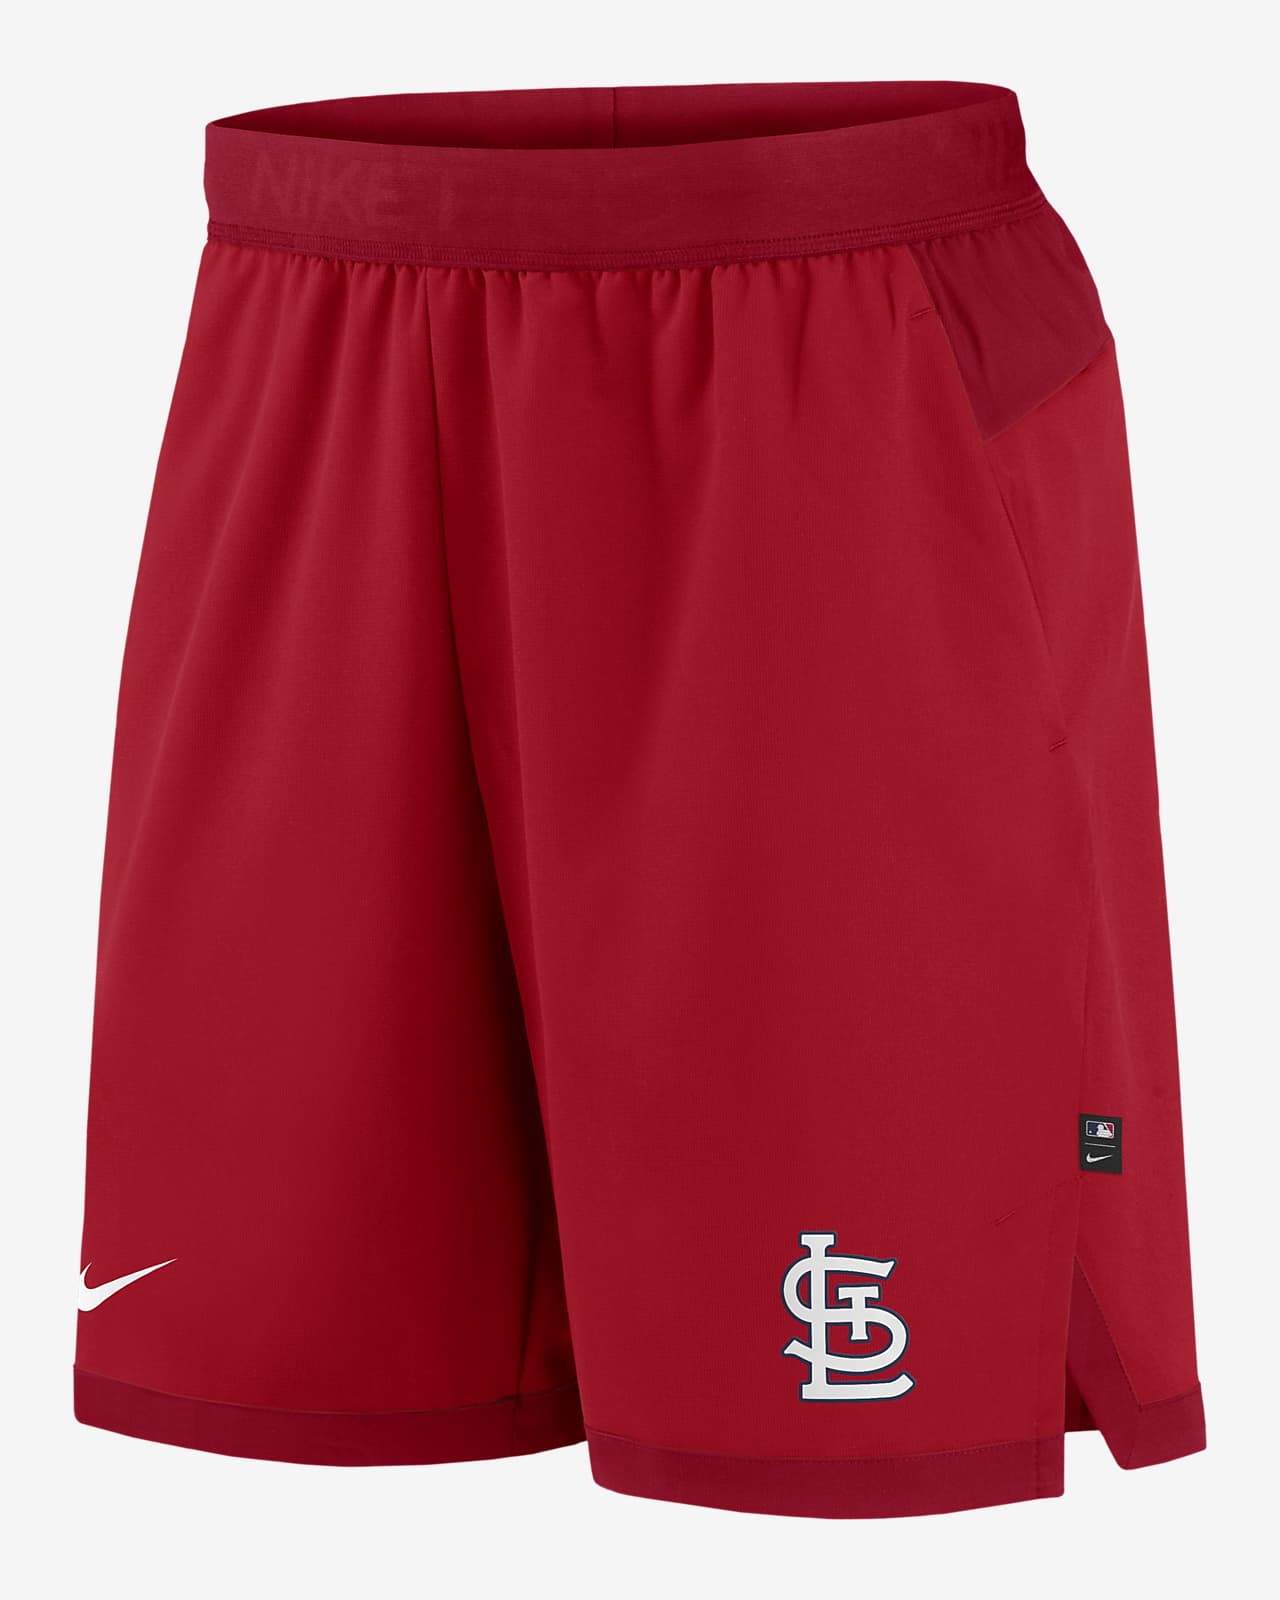 Men's Red St. Louis Cardinals Big & Tall Team Shorts 